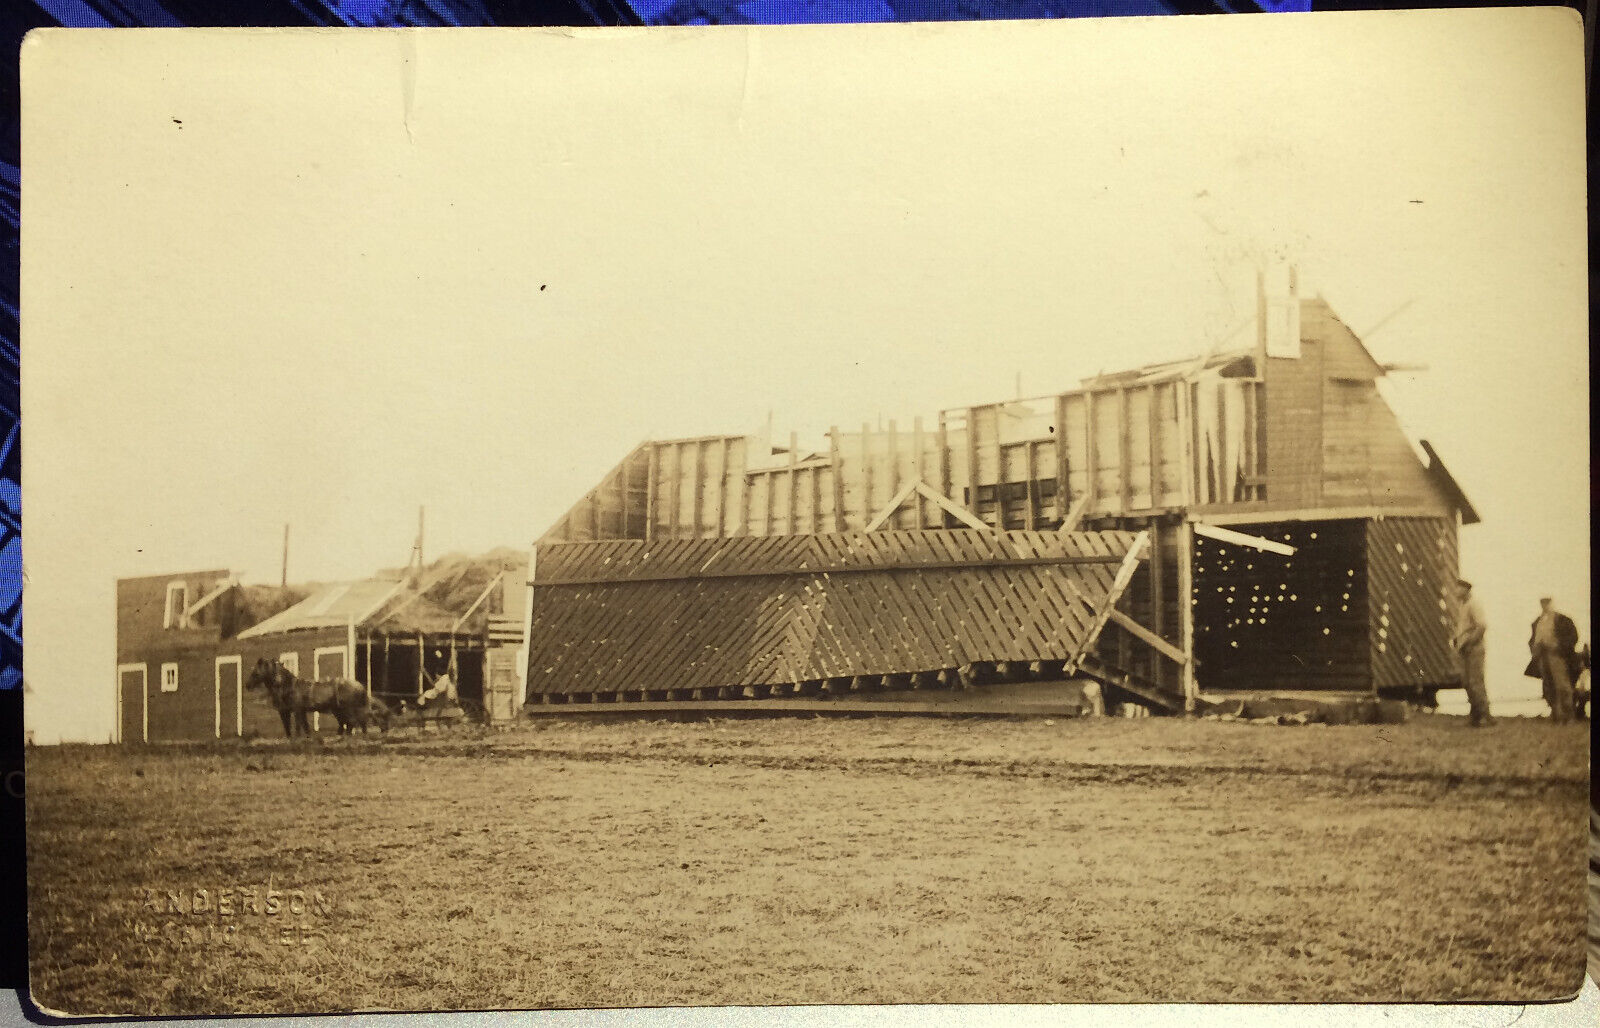 WAHOO, NEBRASKA, Photo Post Card, 1905-15 Saunders County, FARM SCENE, HORSE